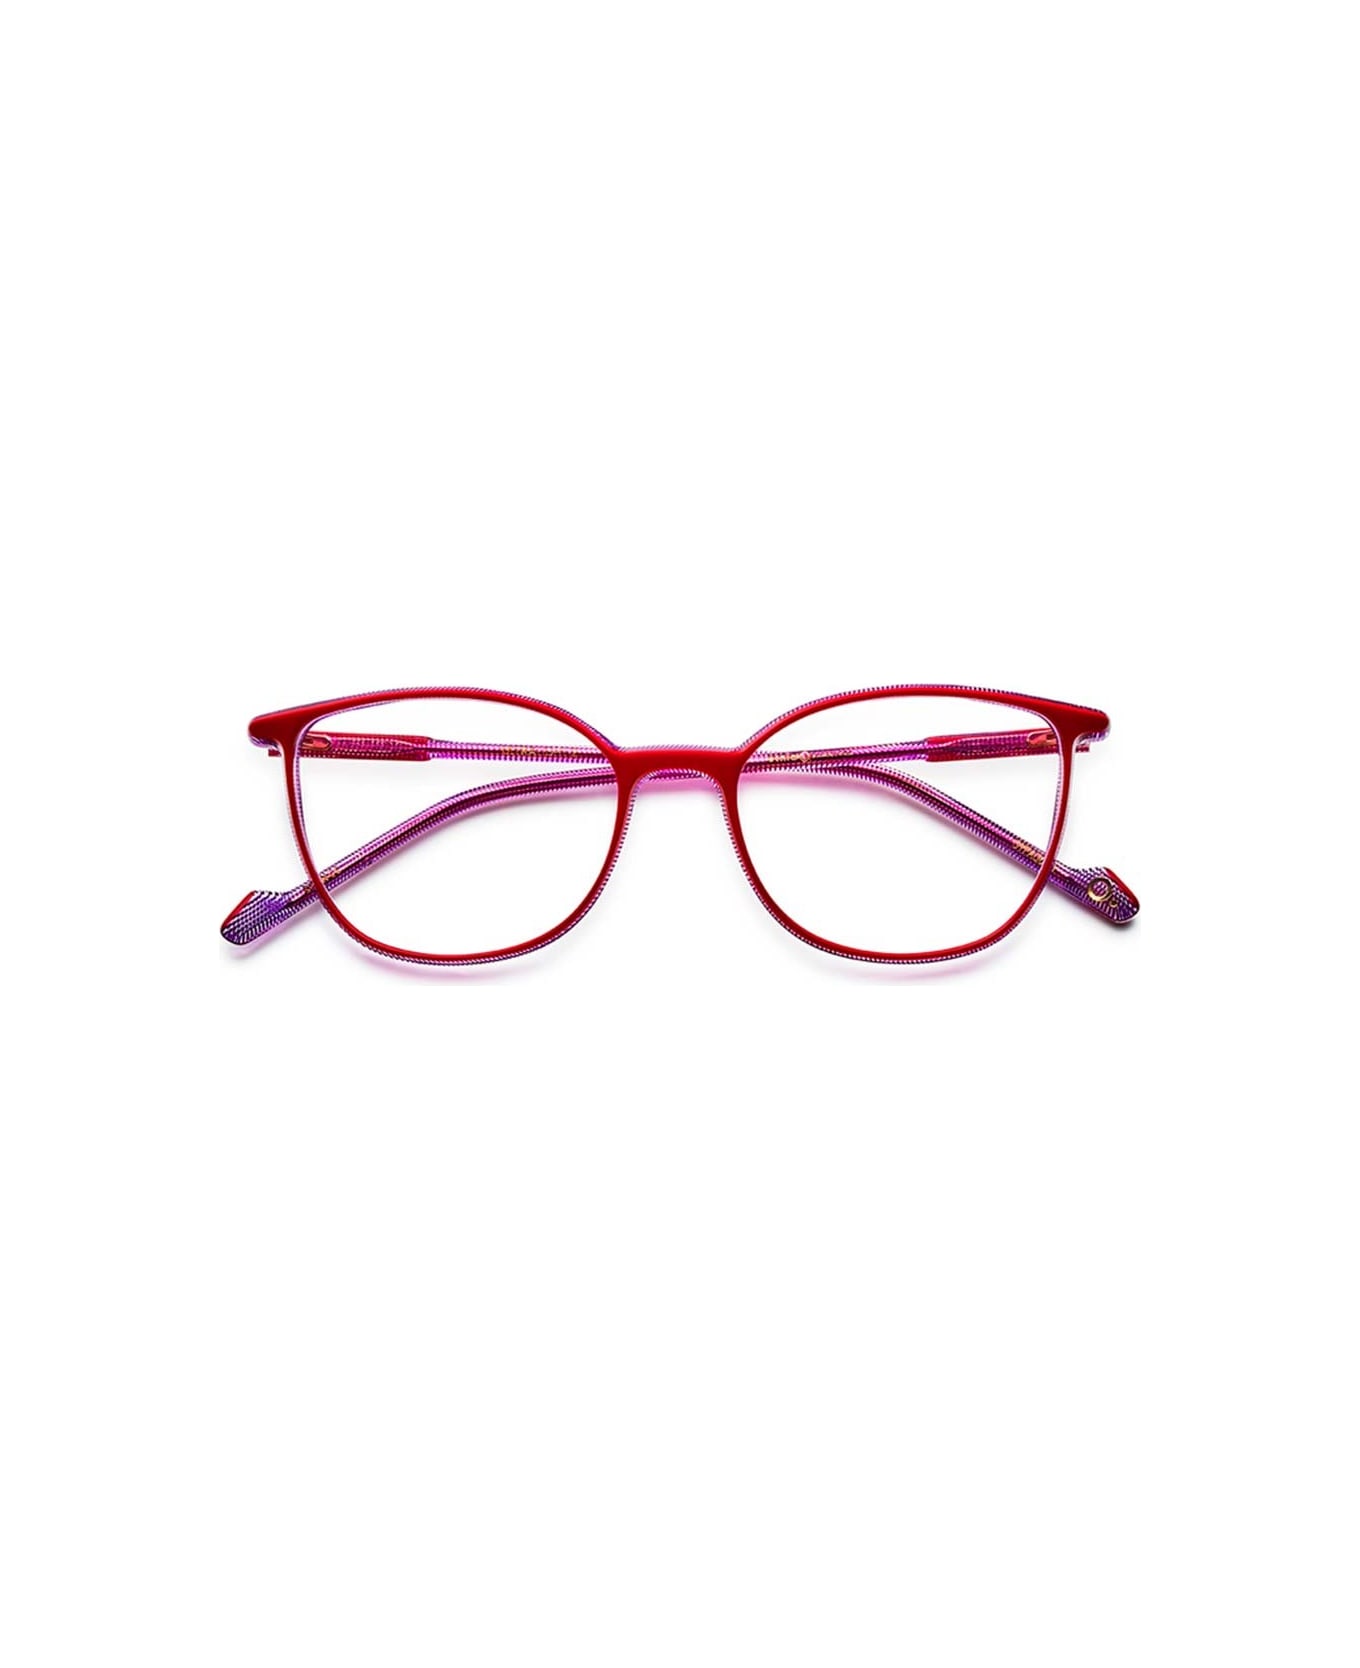 Etnia Barcelona Eyewear - Rosso